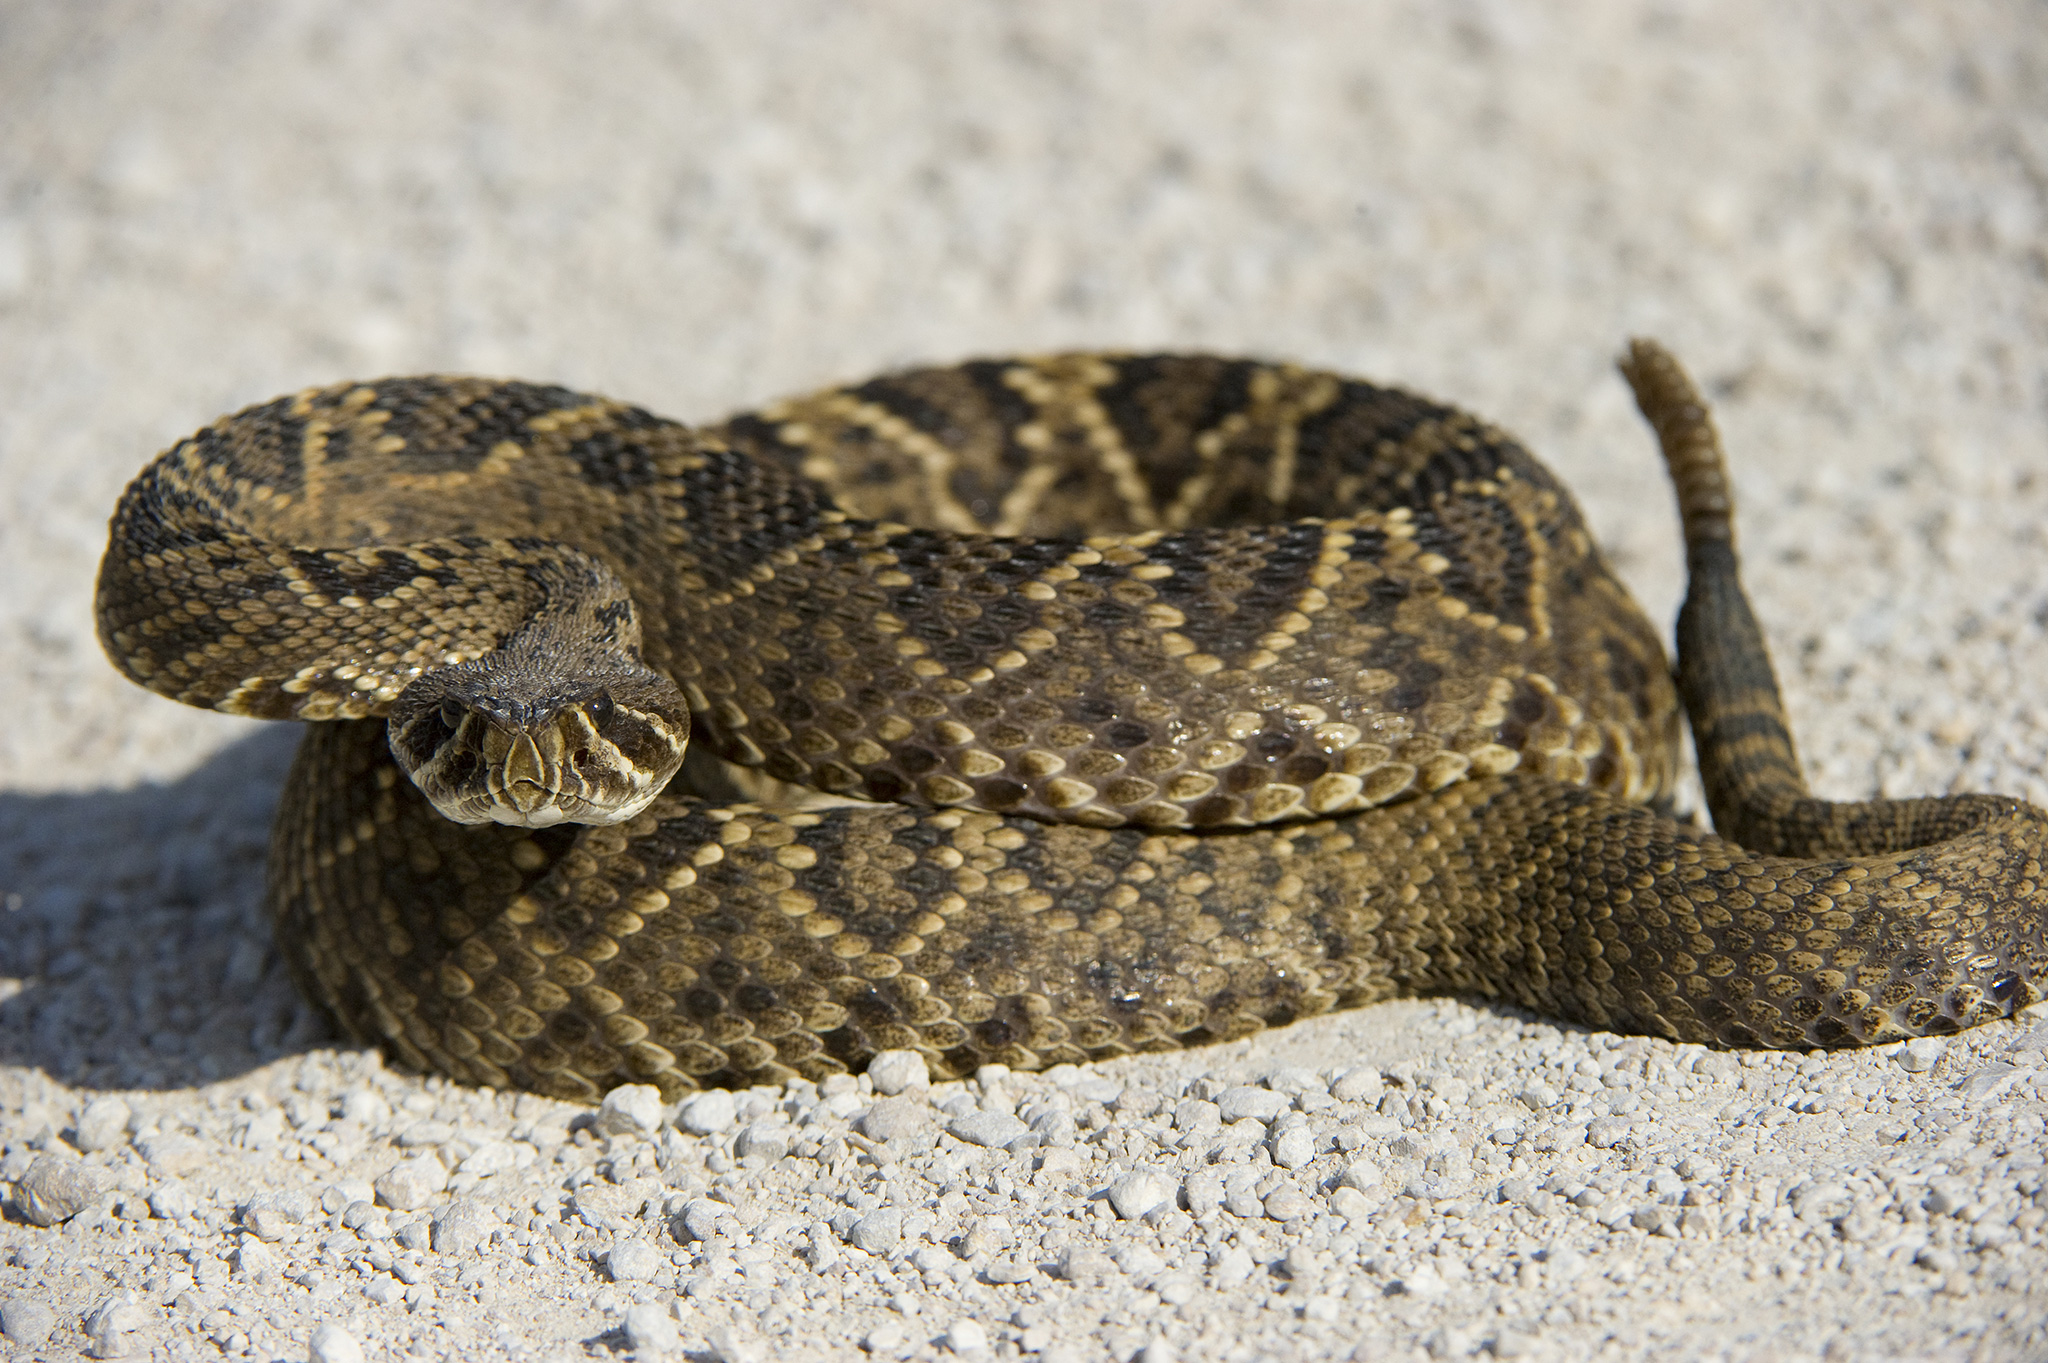 Rattle snake photo